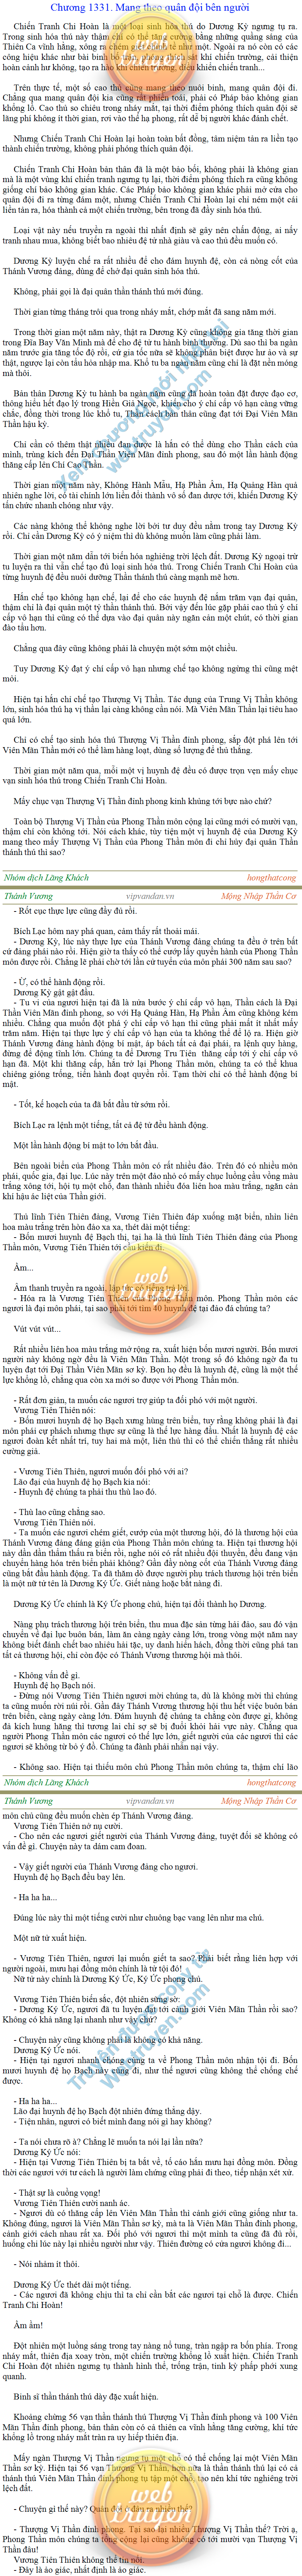 Thanh-vuong-1331.png